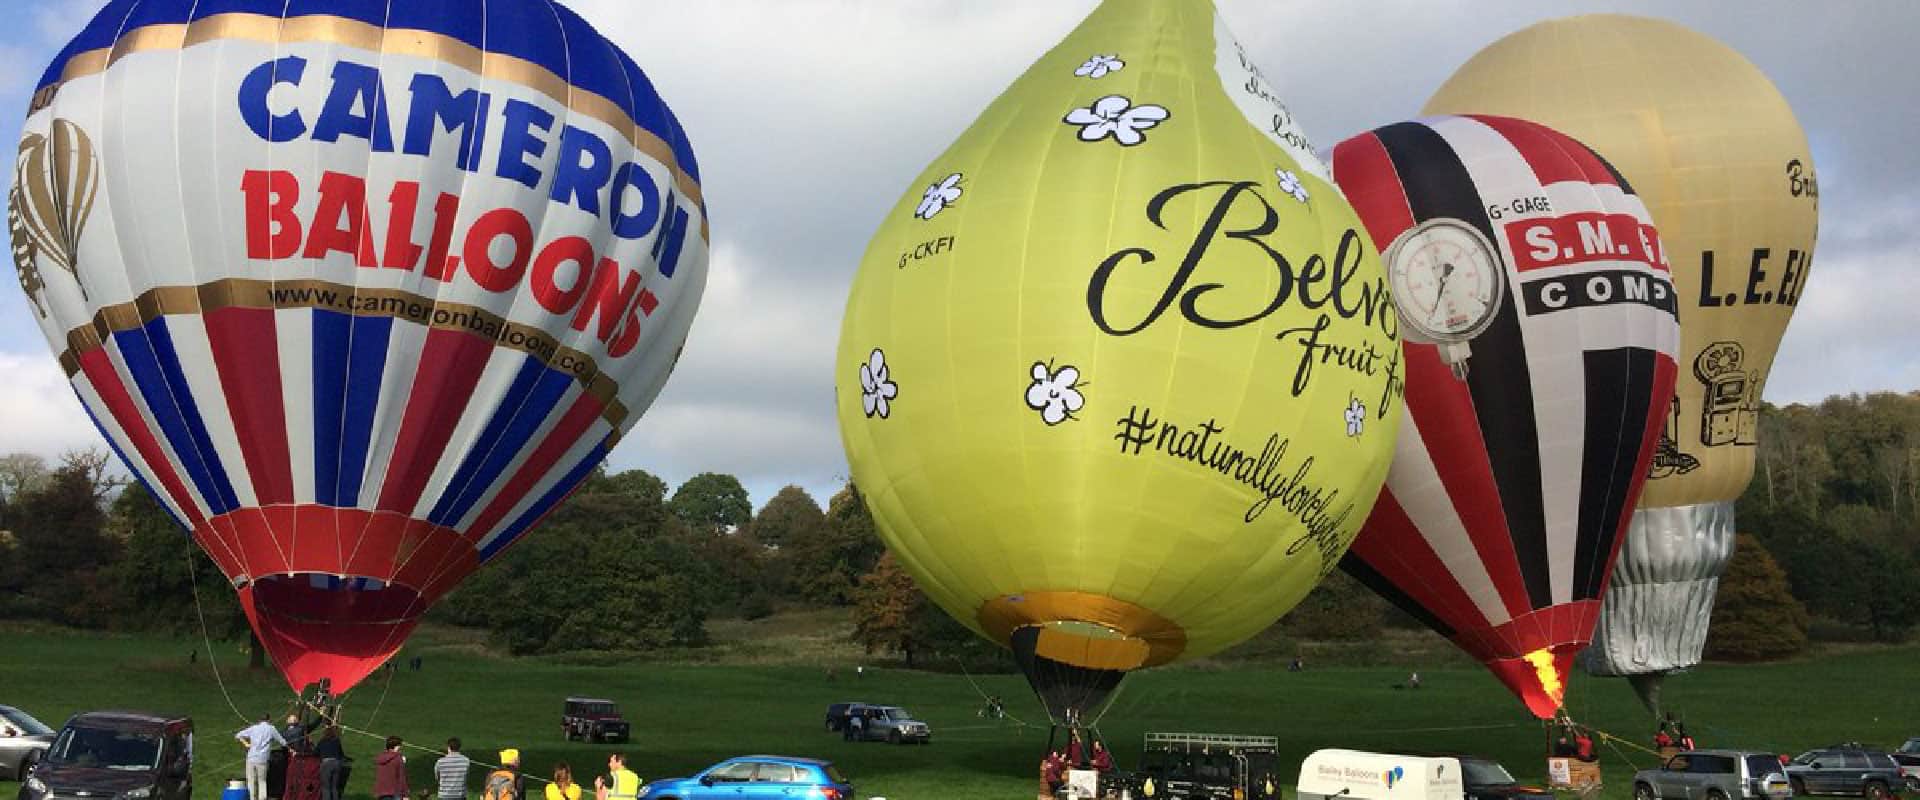 Ballooningmedia in UK